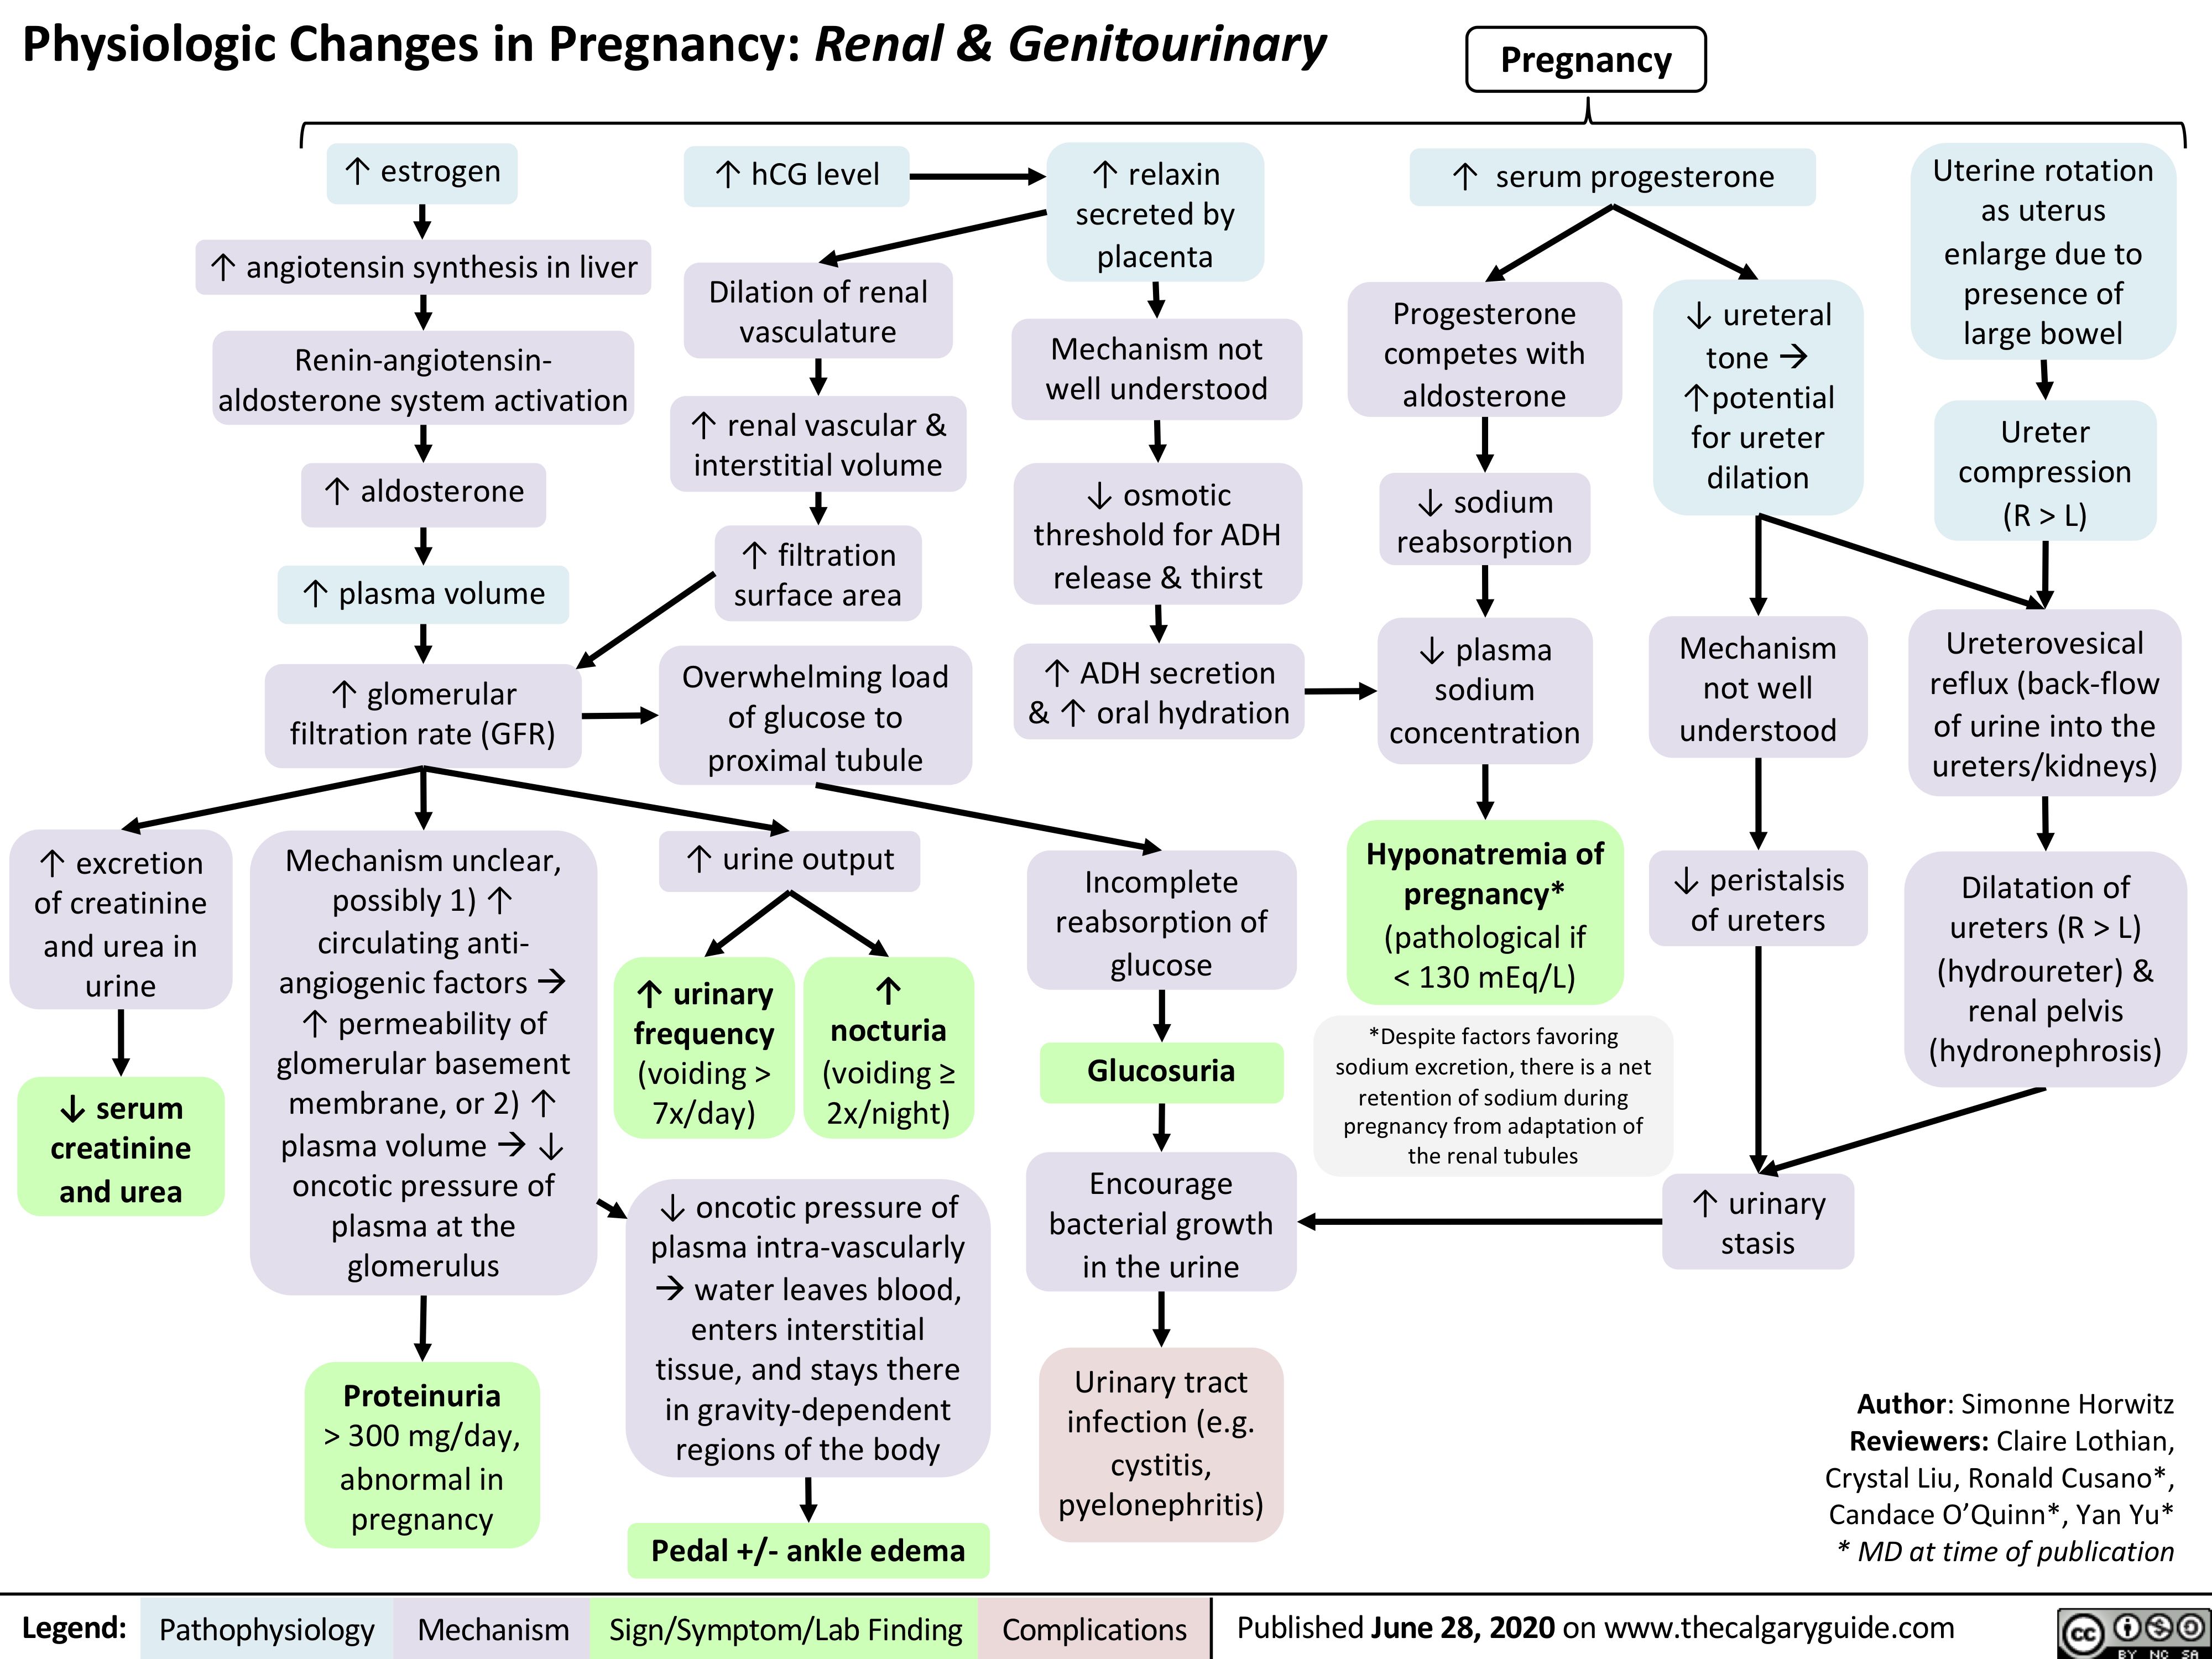 https://calgaryguide.ucalgary.ca/wp-content/uploads/2020/06/GU-changes-in-pregnancy-1.jpg